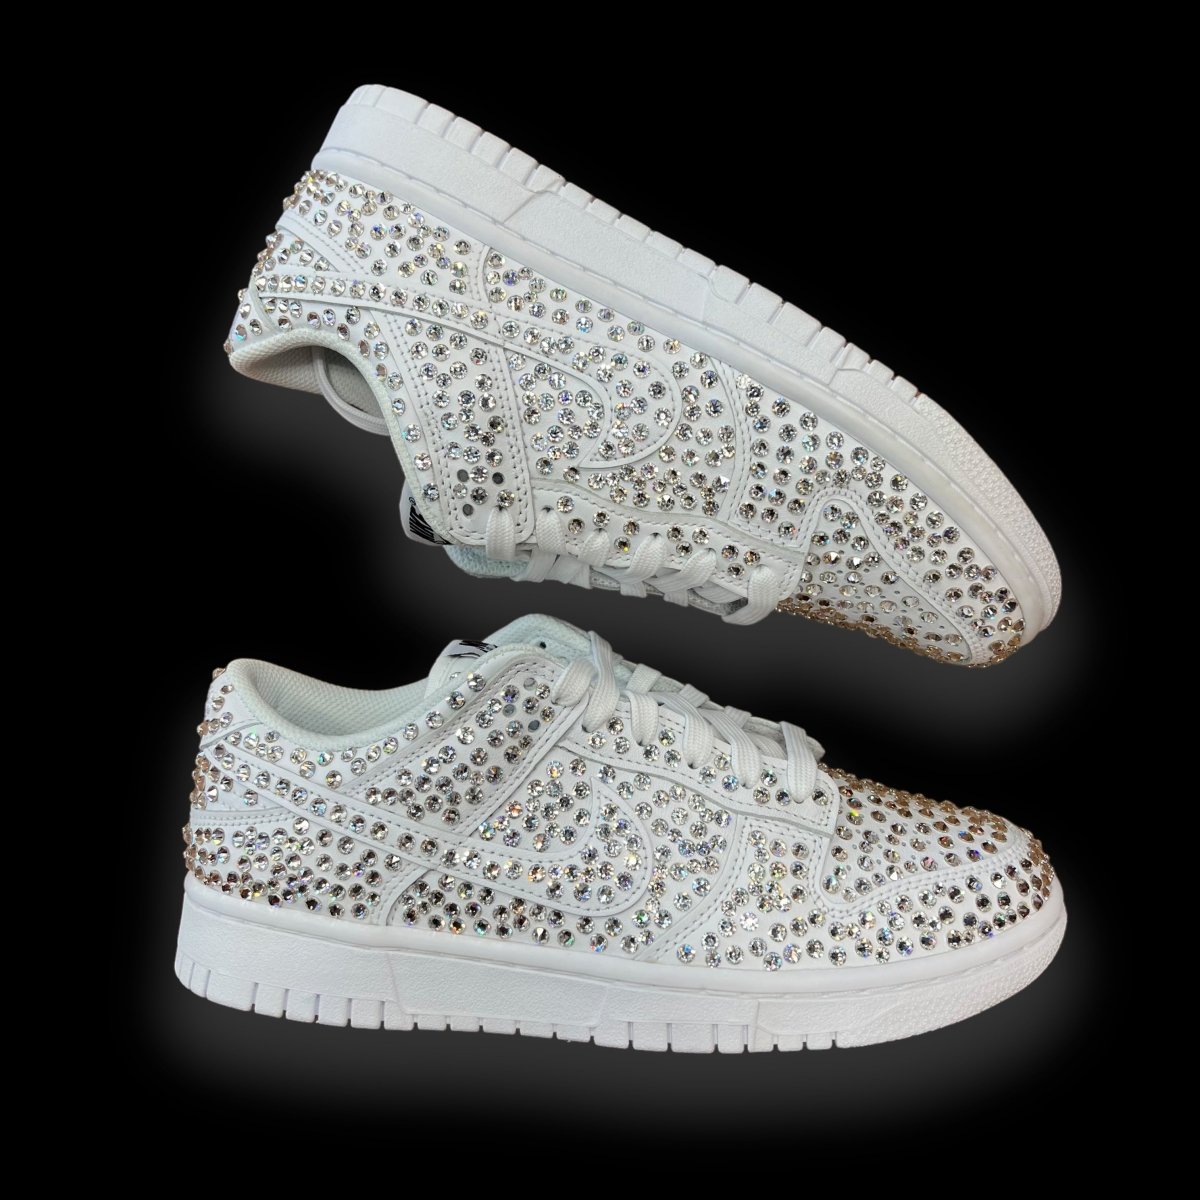 Dunk Low Blingy Jawns Swarovski Crystals - Low Sneaker - Jawns on Fire Sneakers & Streetwear